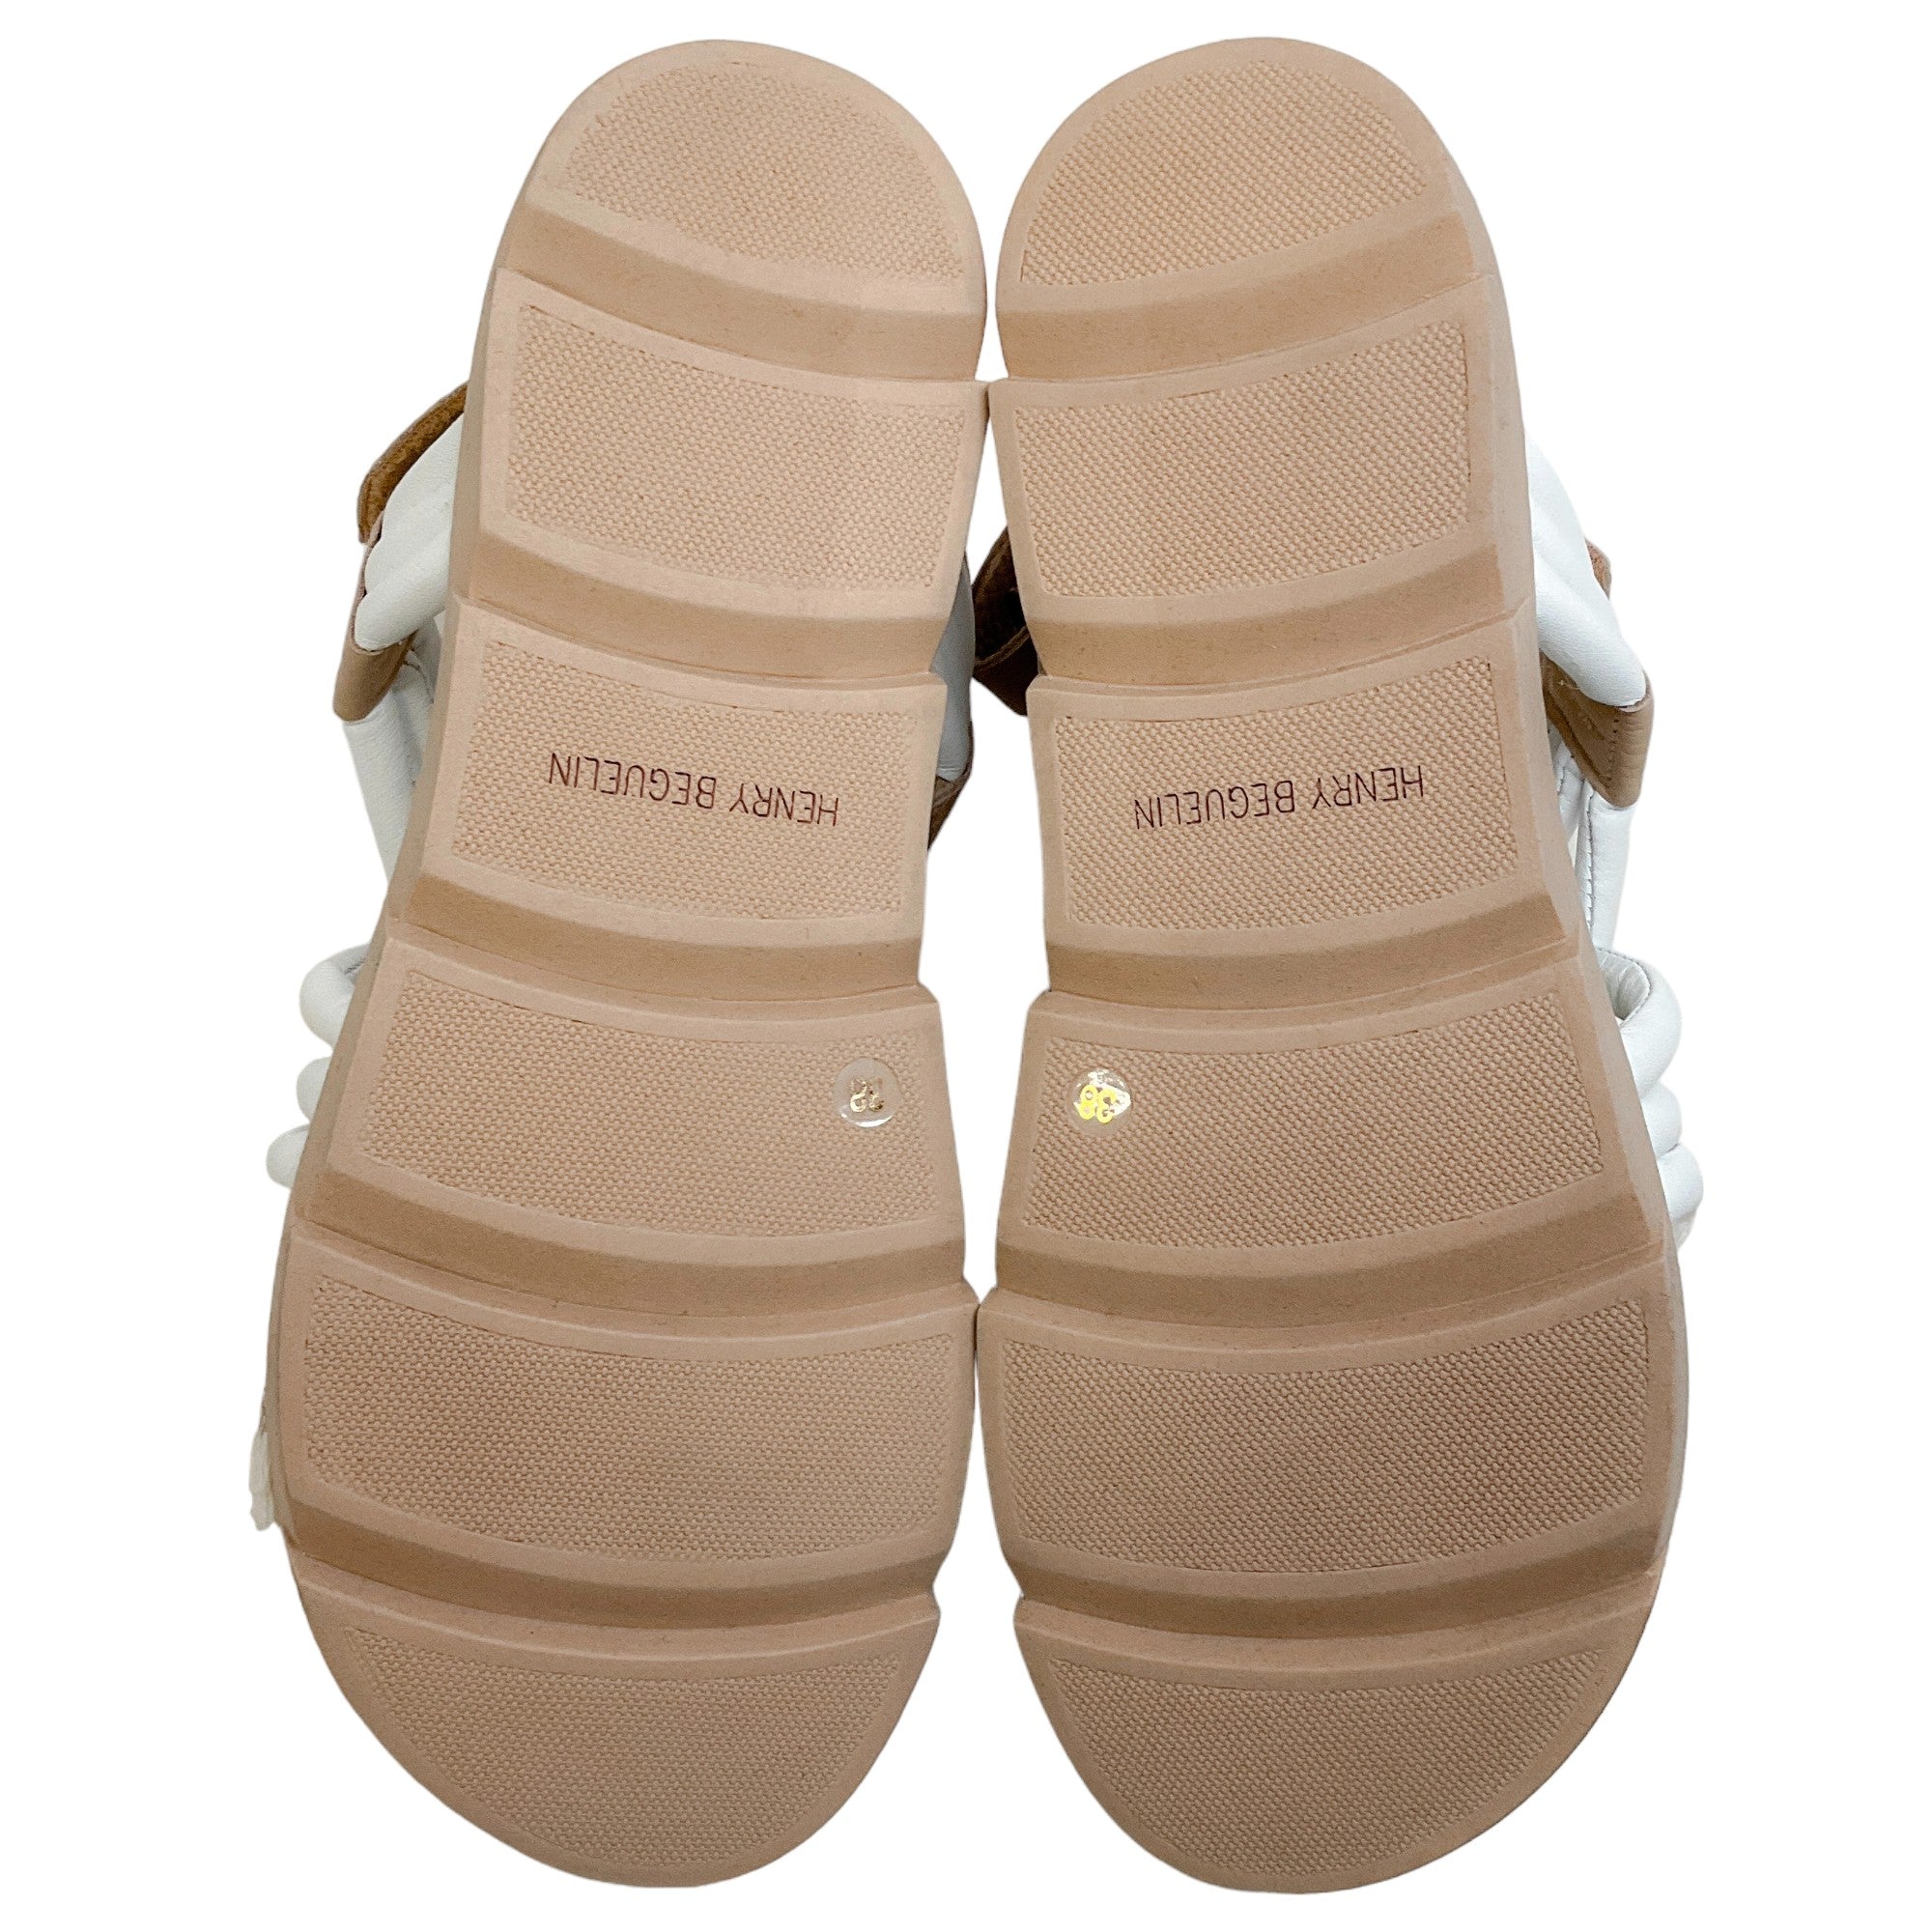 Henry Beguelin White / Beige Sabbia Intreccio Sandals